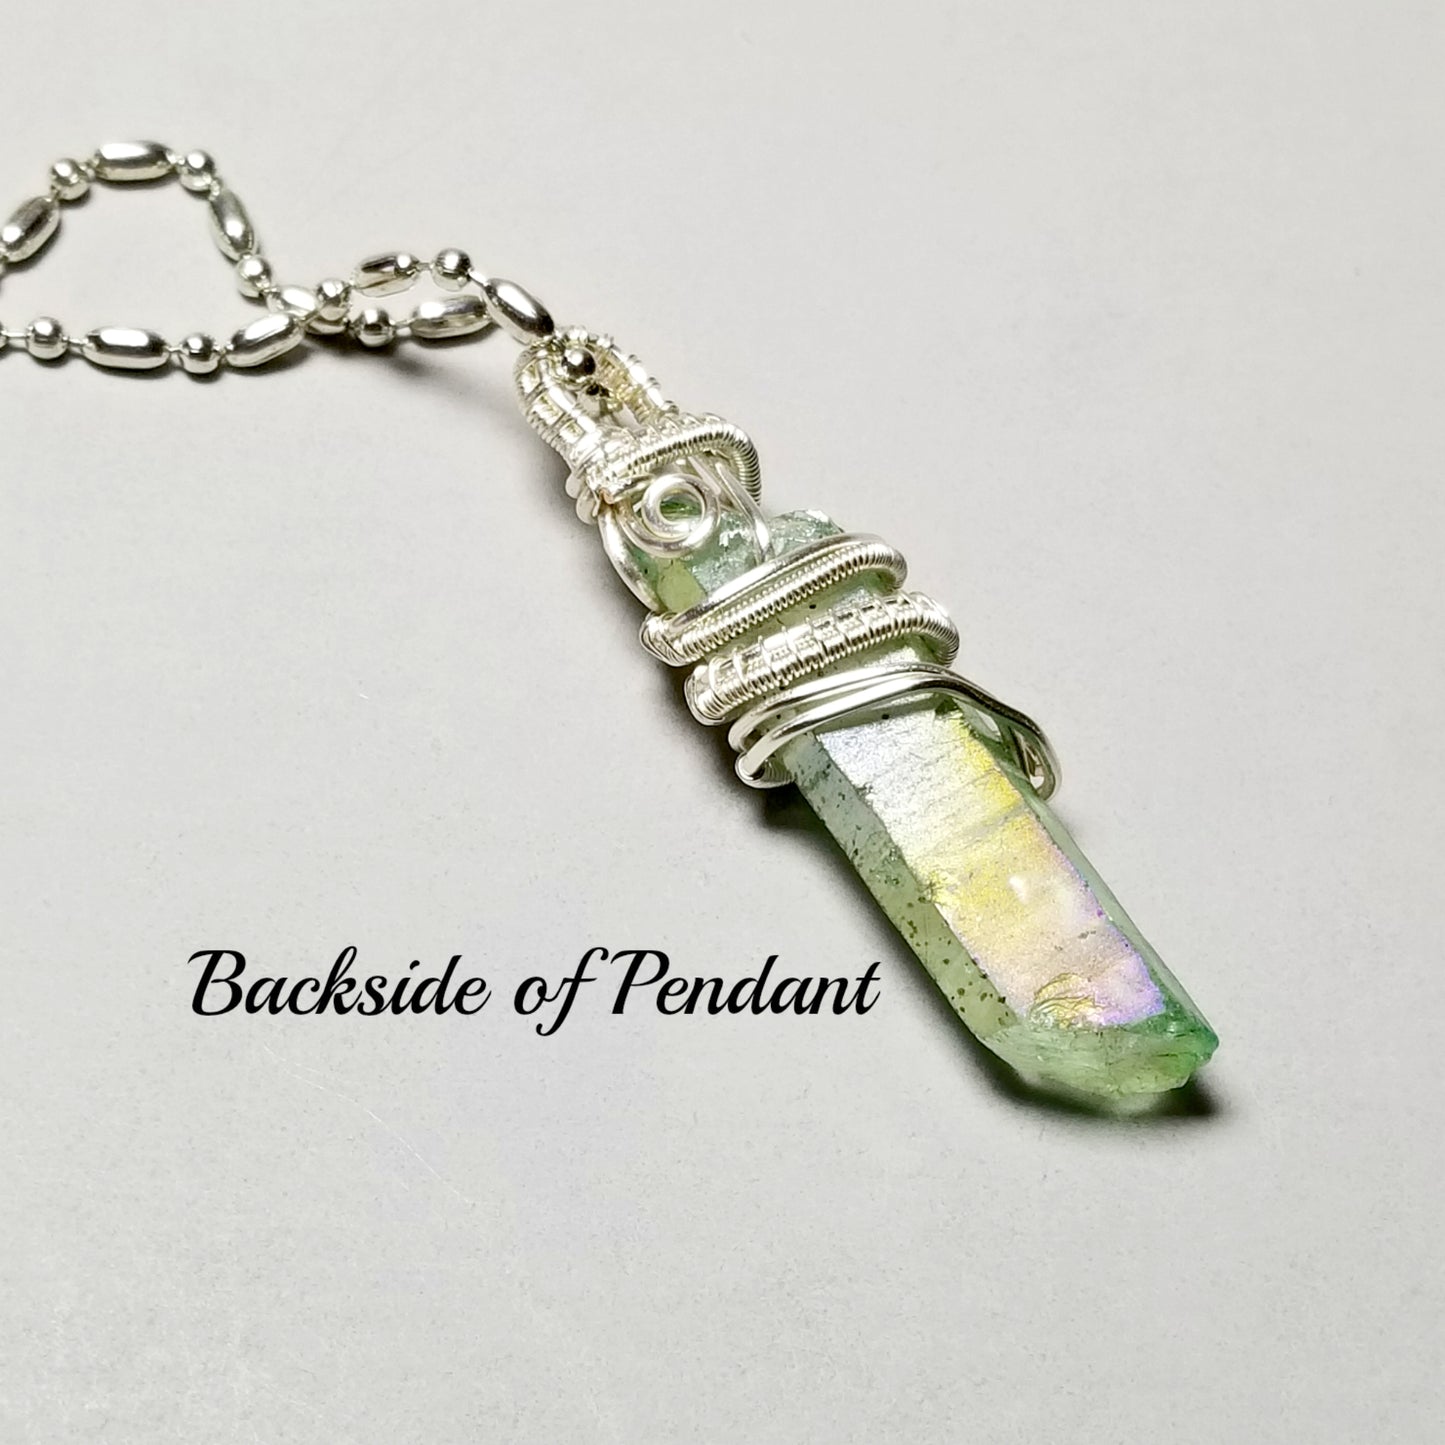 Raw Crystal Necklace, Aura Crystal Healing Jewelry, Gift Idea